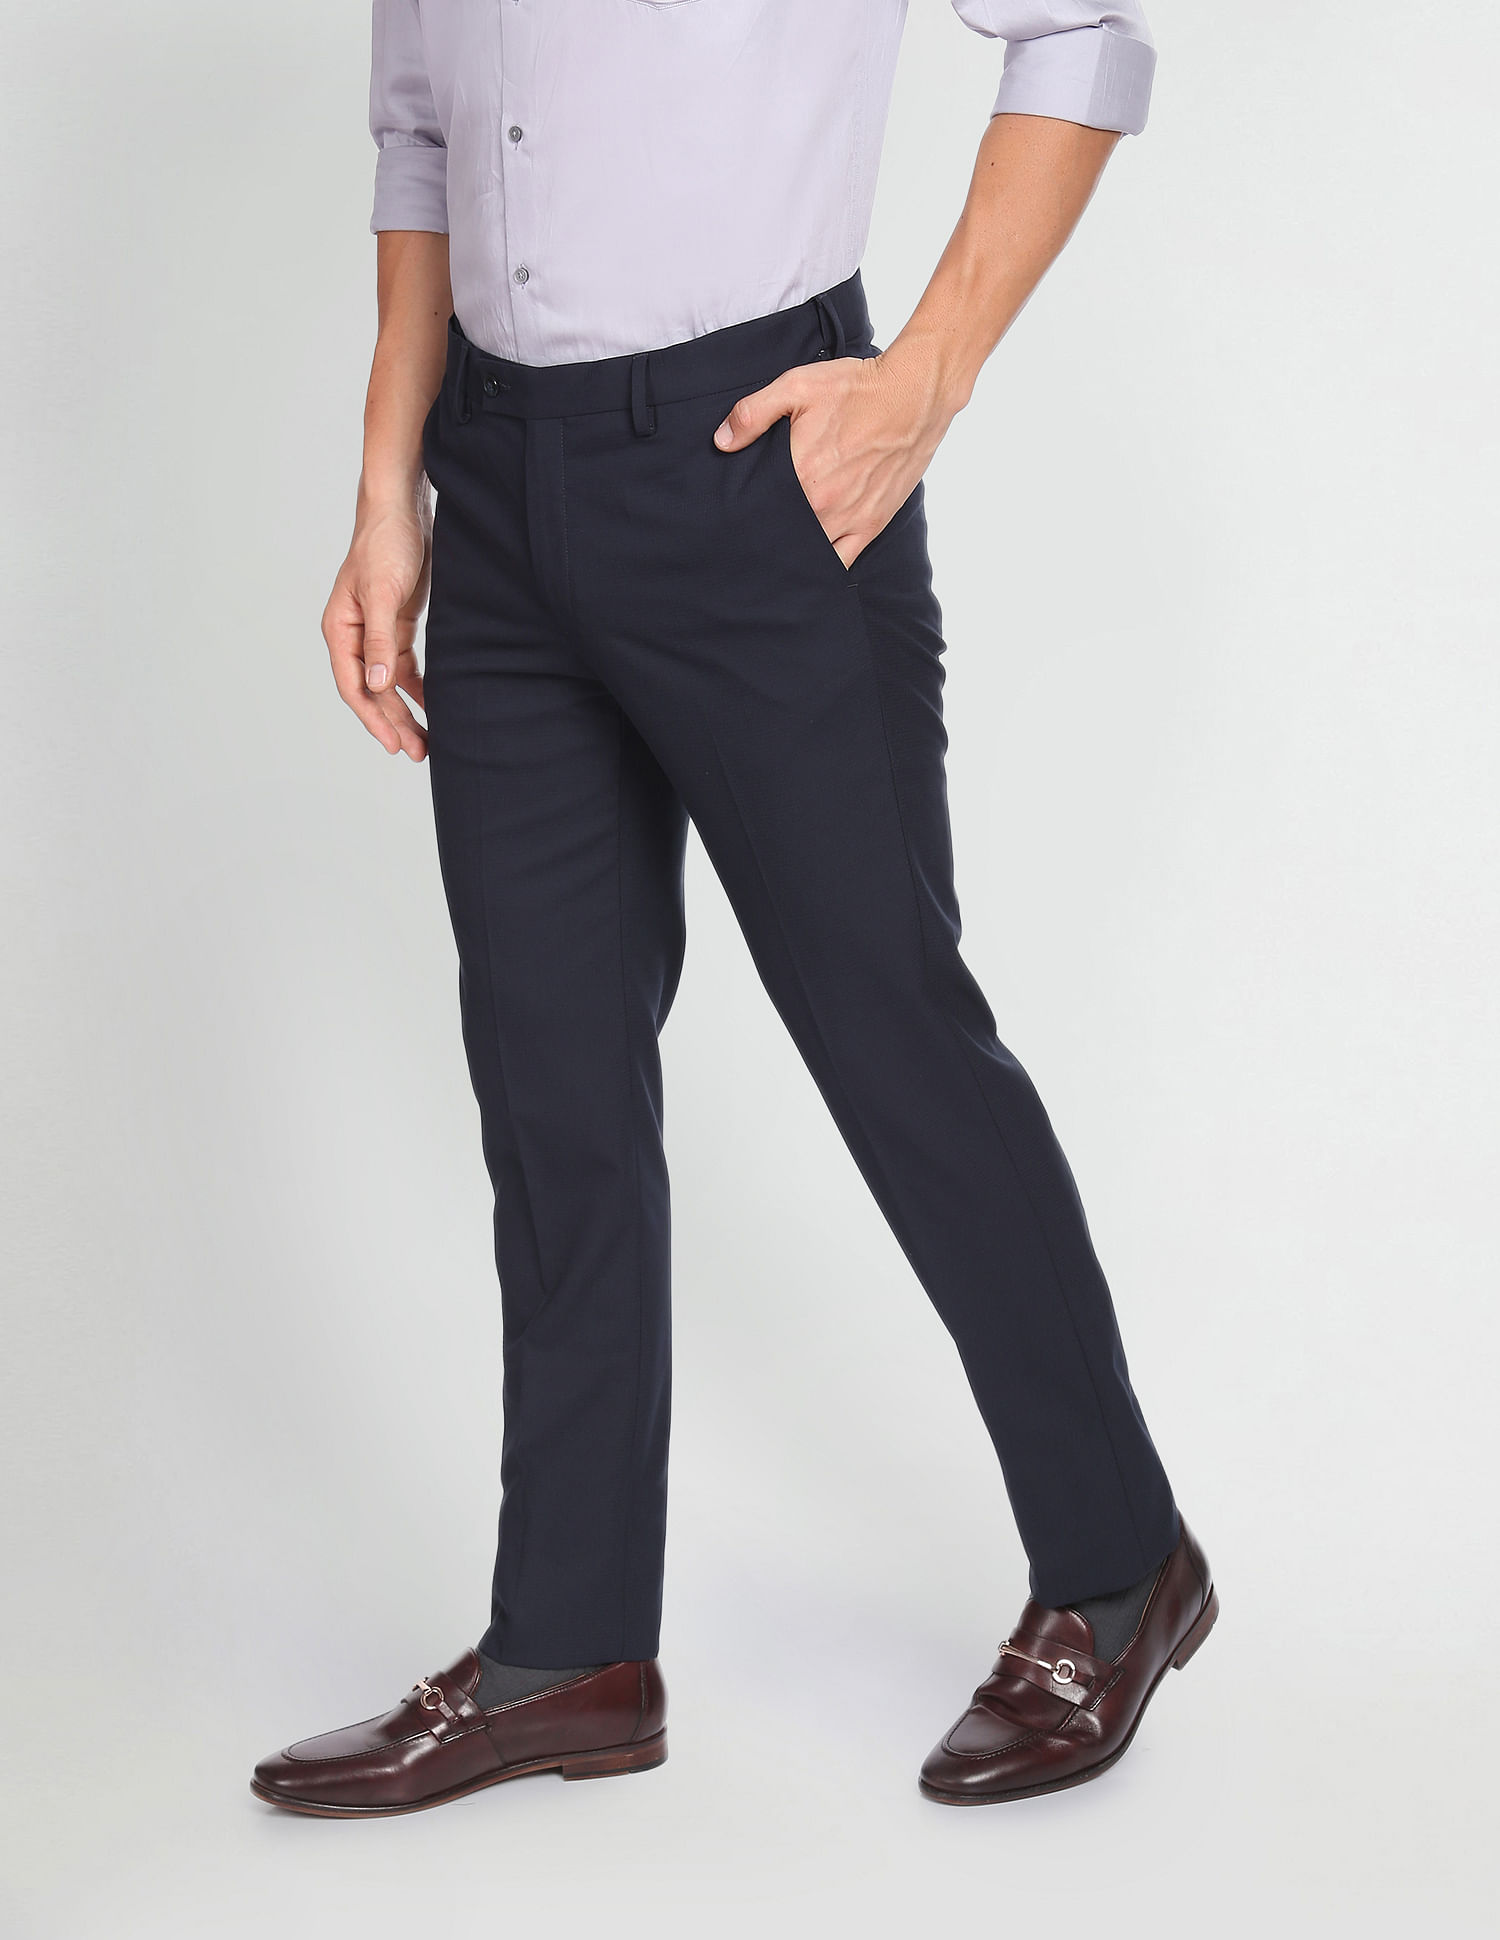 Esprit Collection REGULAR FIT - Suit trousers - navy/dark blue -  Zalando.co.uk